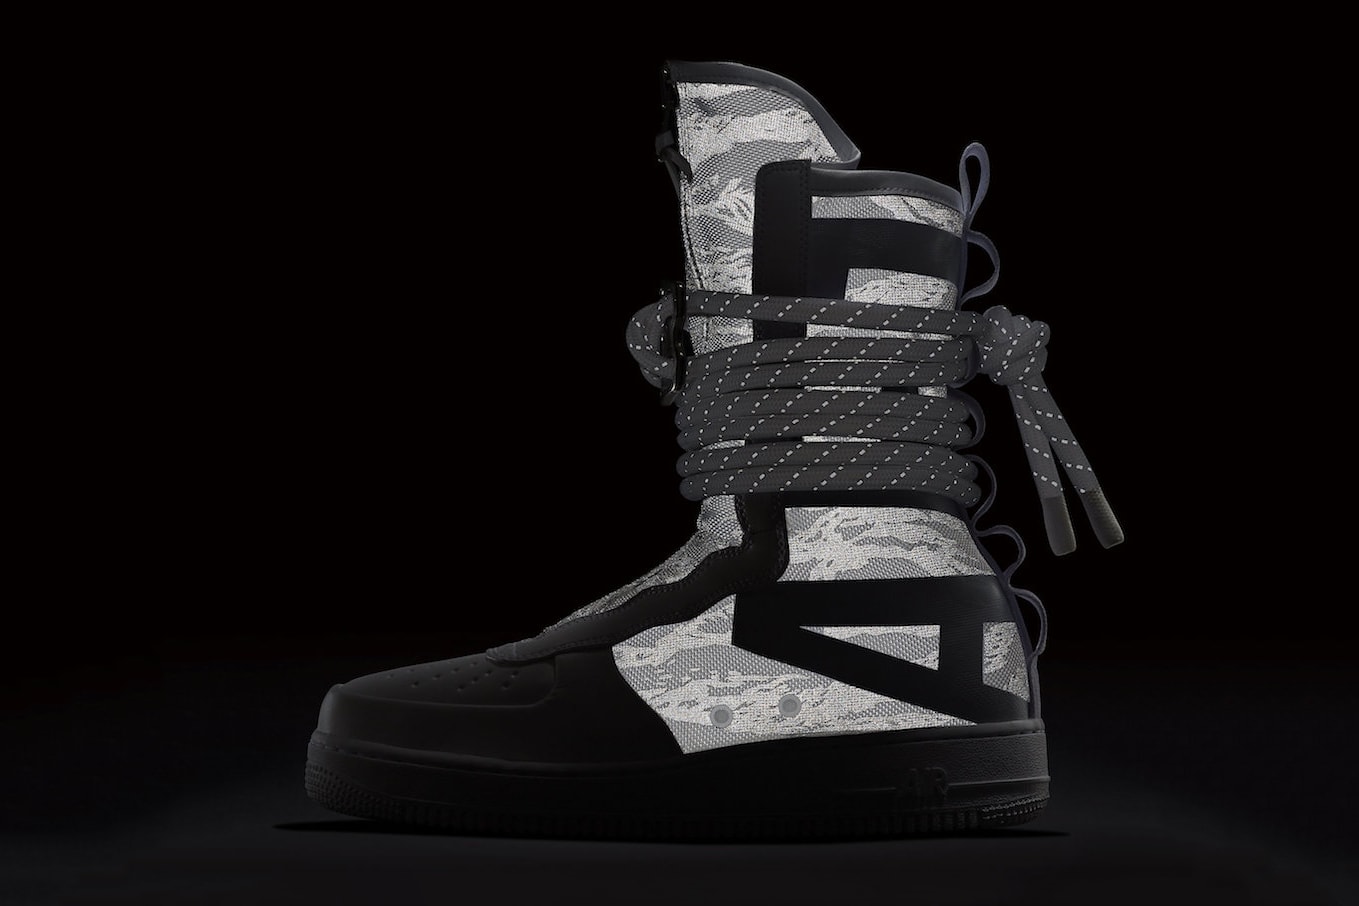 Nike SF-AF1 High Winter Camo Footwear Sneakers Shoes Closer Look Release Date Info Drops